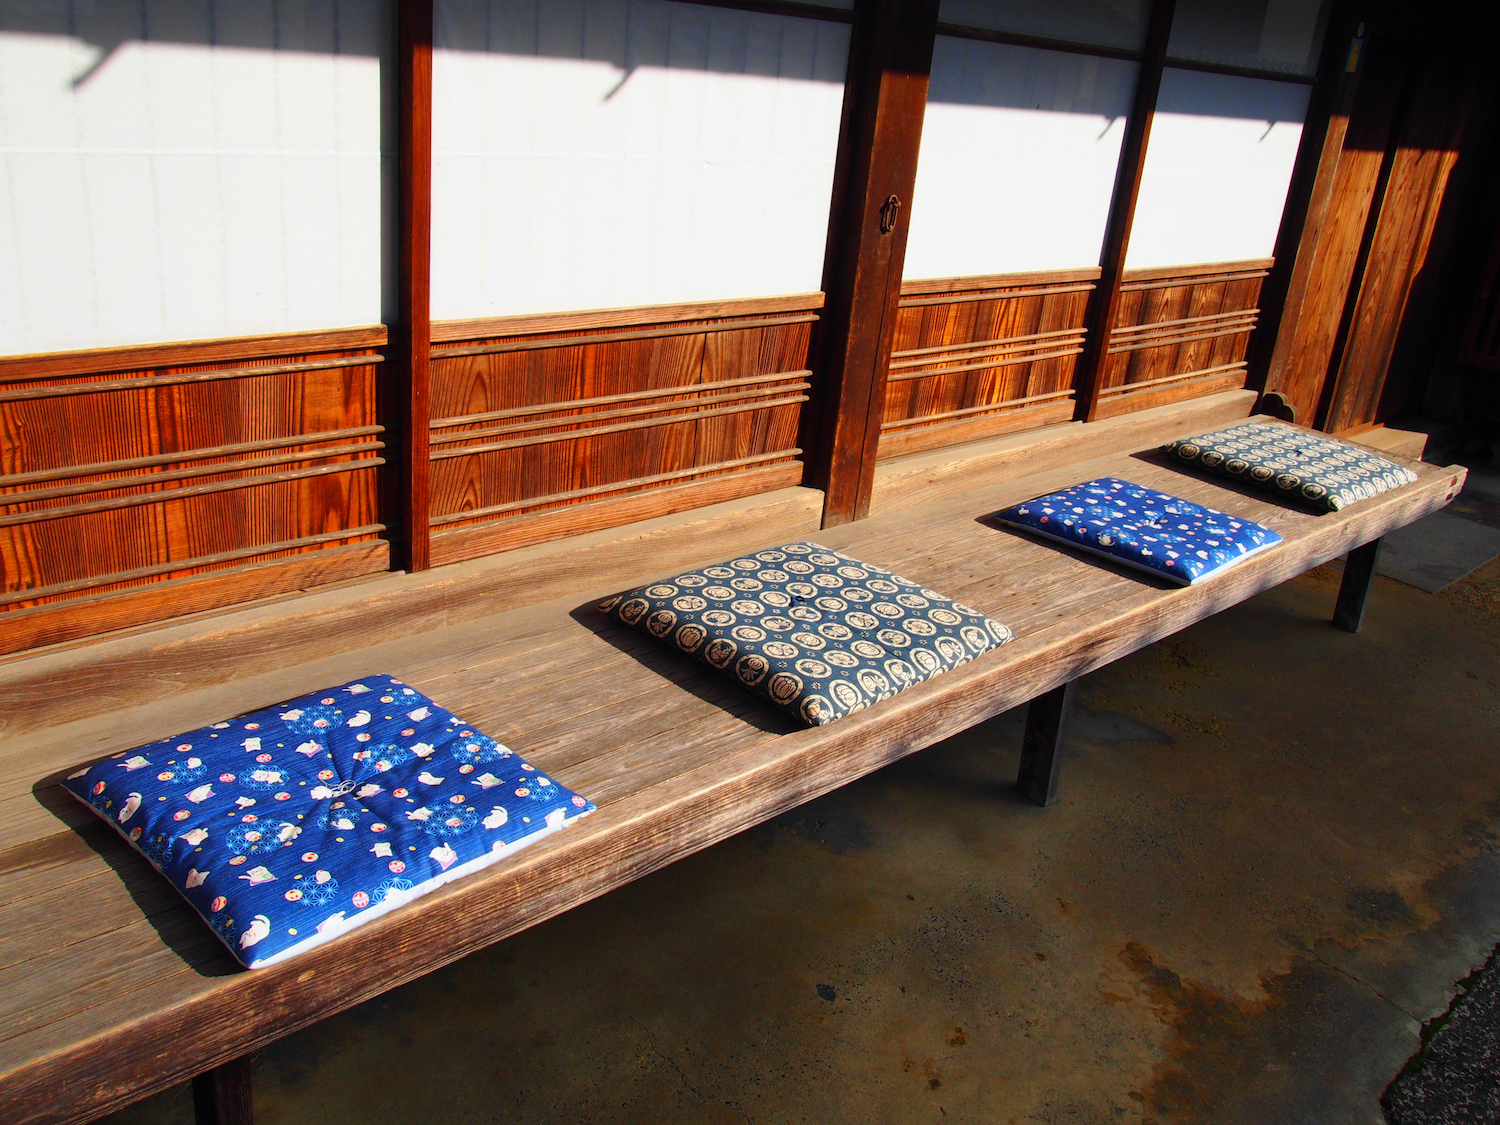 Japanese traditional veranda called engawa with four cushions